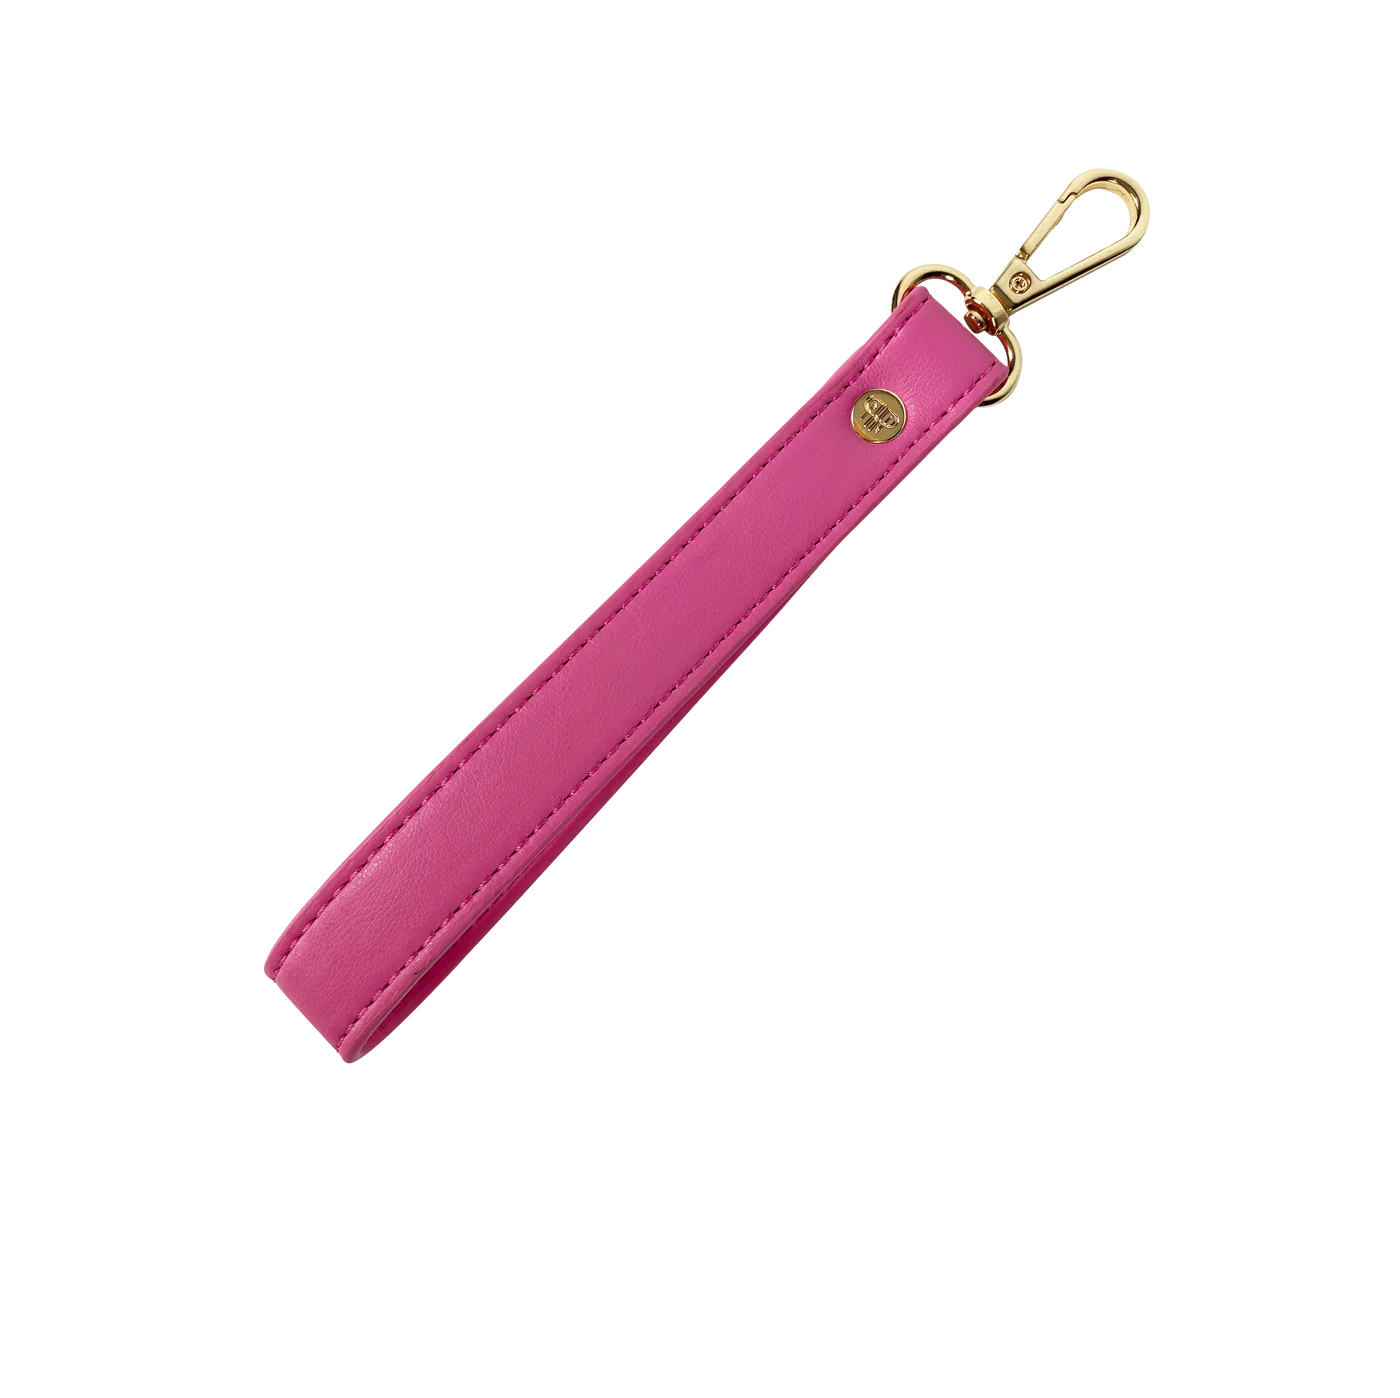 Pursen wristlet strap key chain bubbalicious hot pink